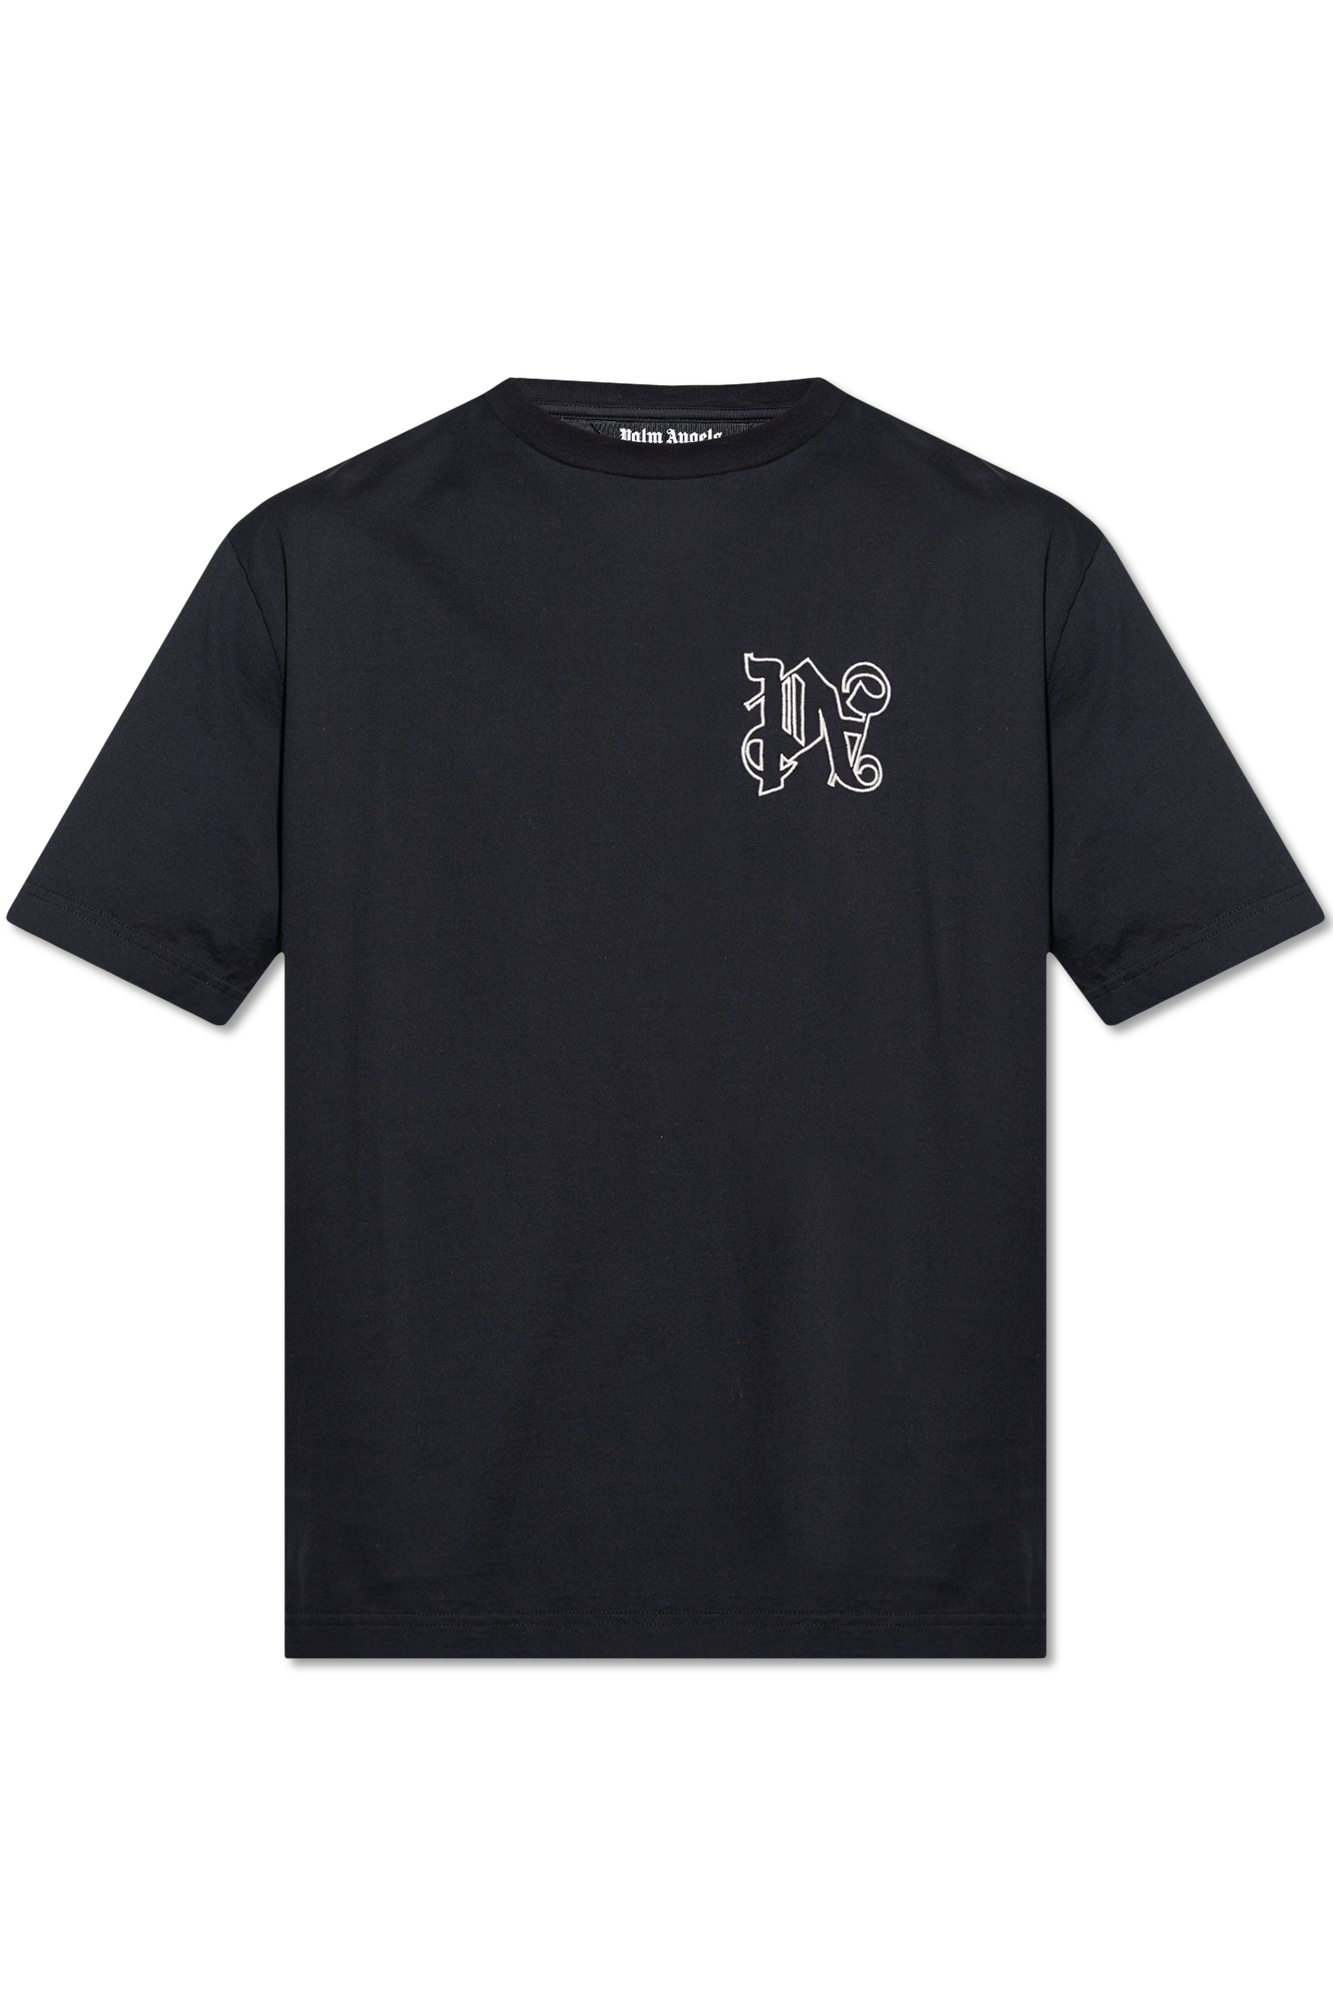 Palm Angels T-shirt with logo | Men's Clothing | Vitkac